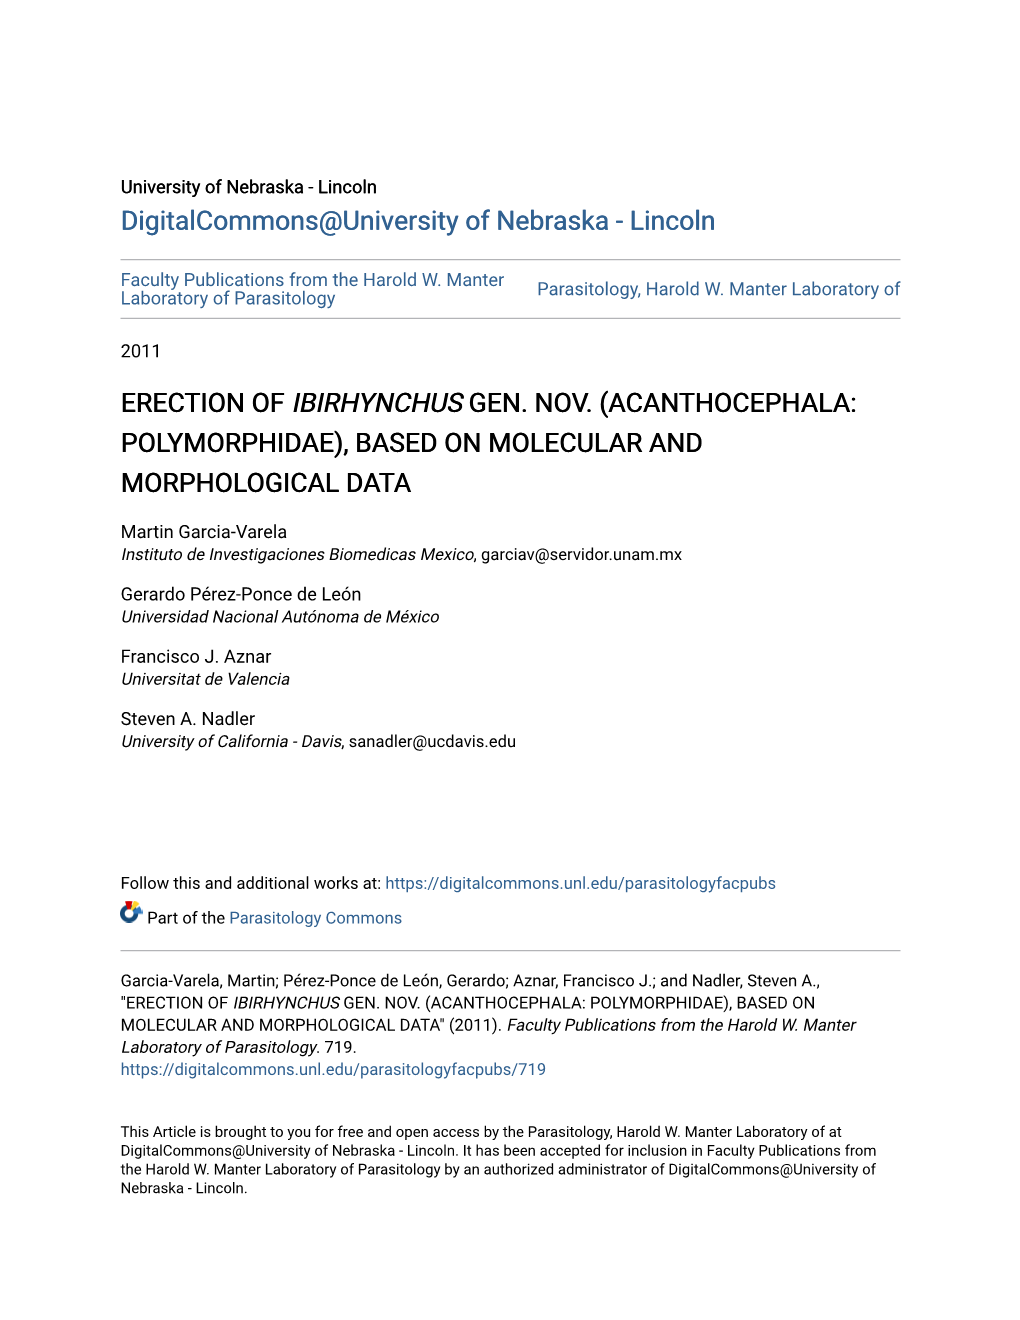 Acanthocephala: Polymorphidae), Based on Molecular and Morphological Data